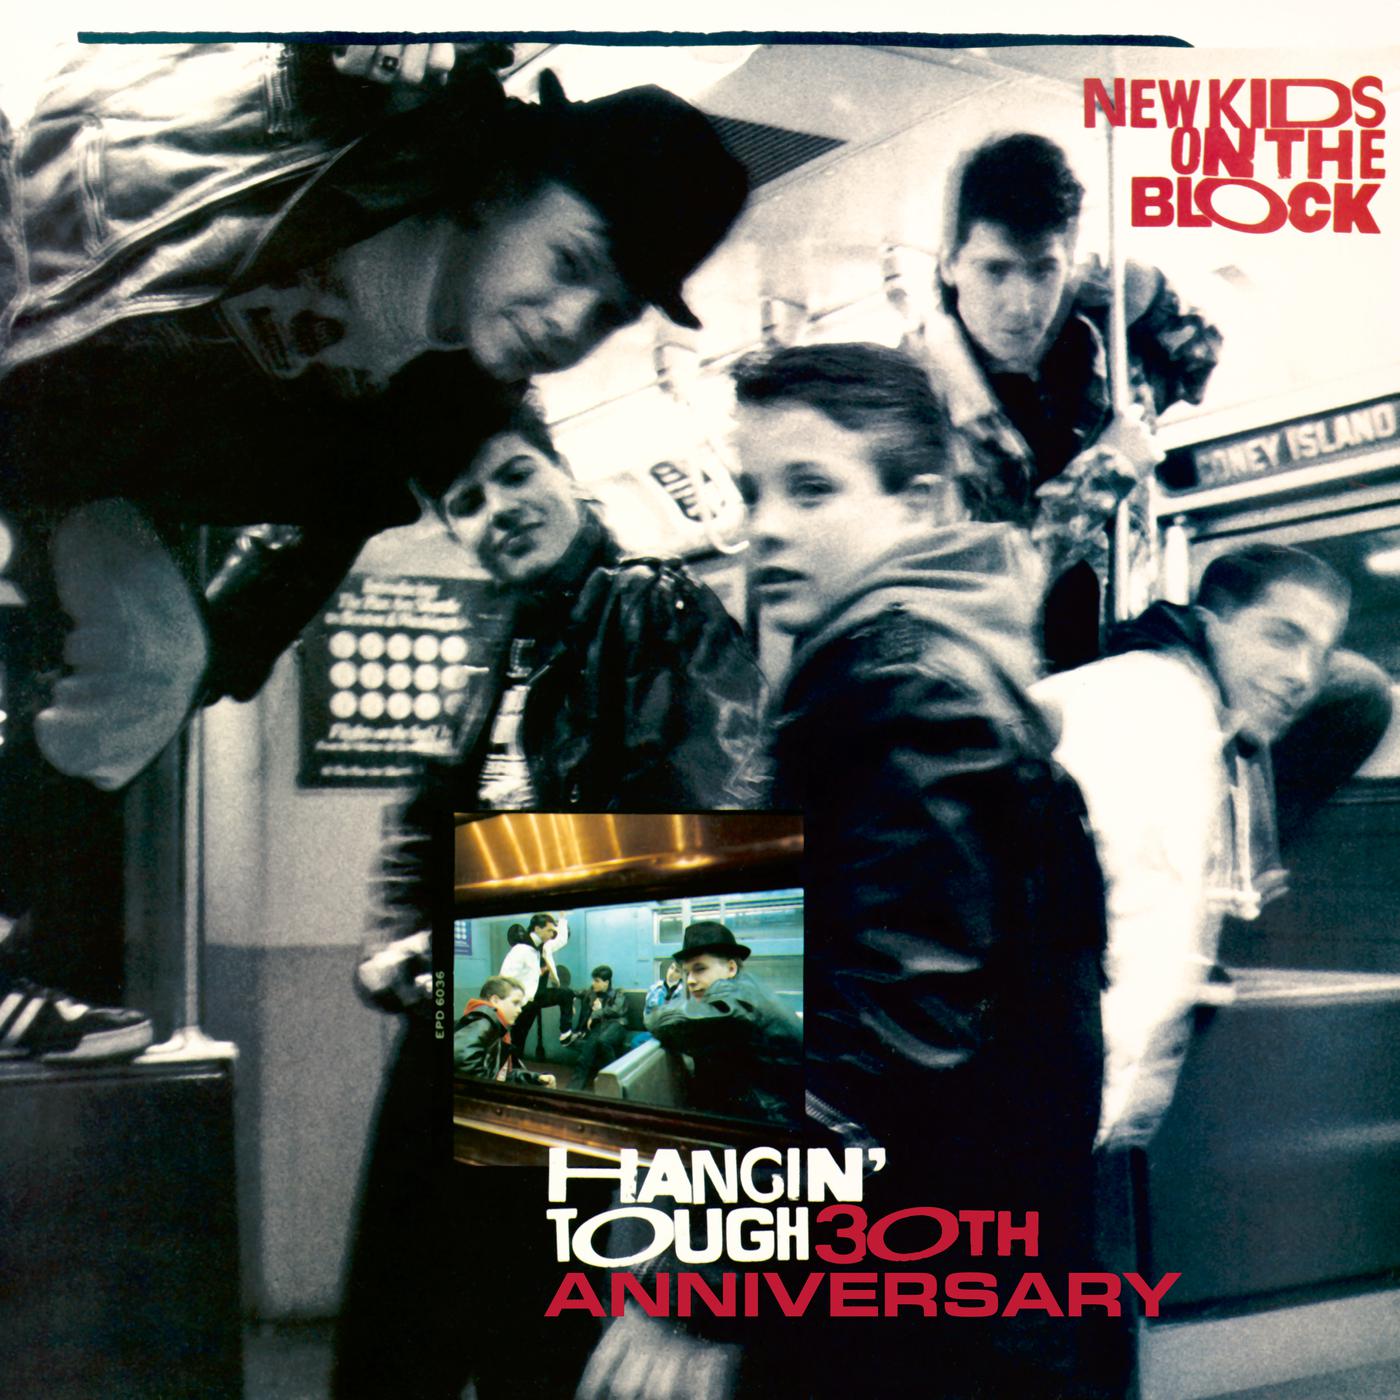 Hangin' Tough歌词 歌手New Kids on the Block-专辑Hangin' Tough (30th Anniversary)-单曲《Hangin' Tough》LRC歌词下载